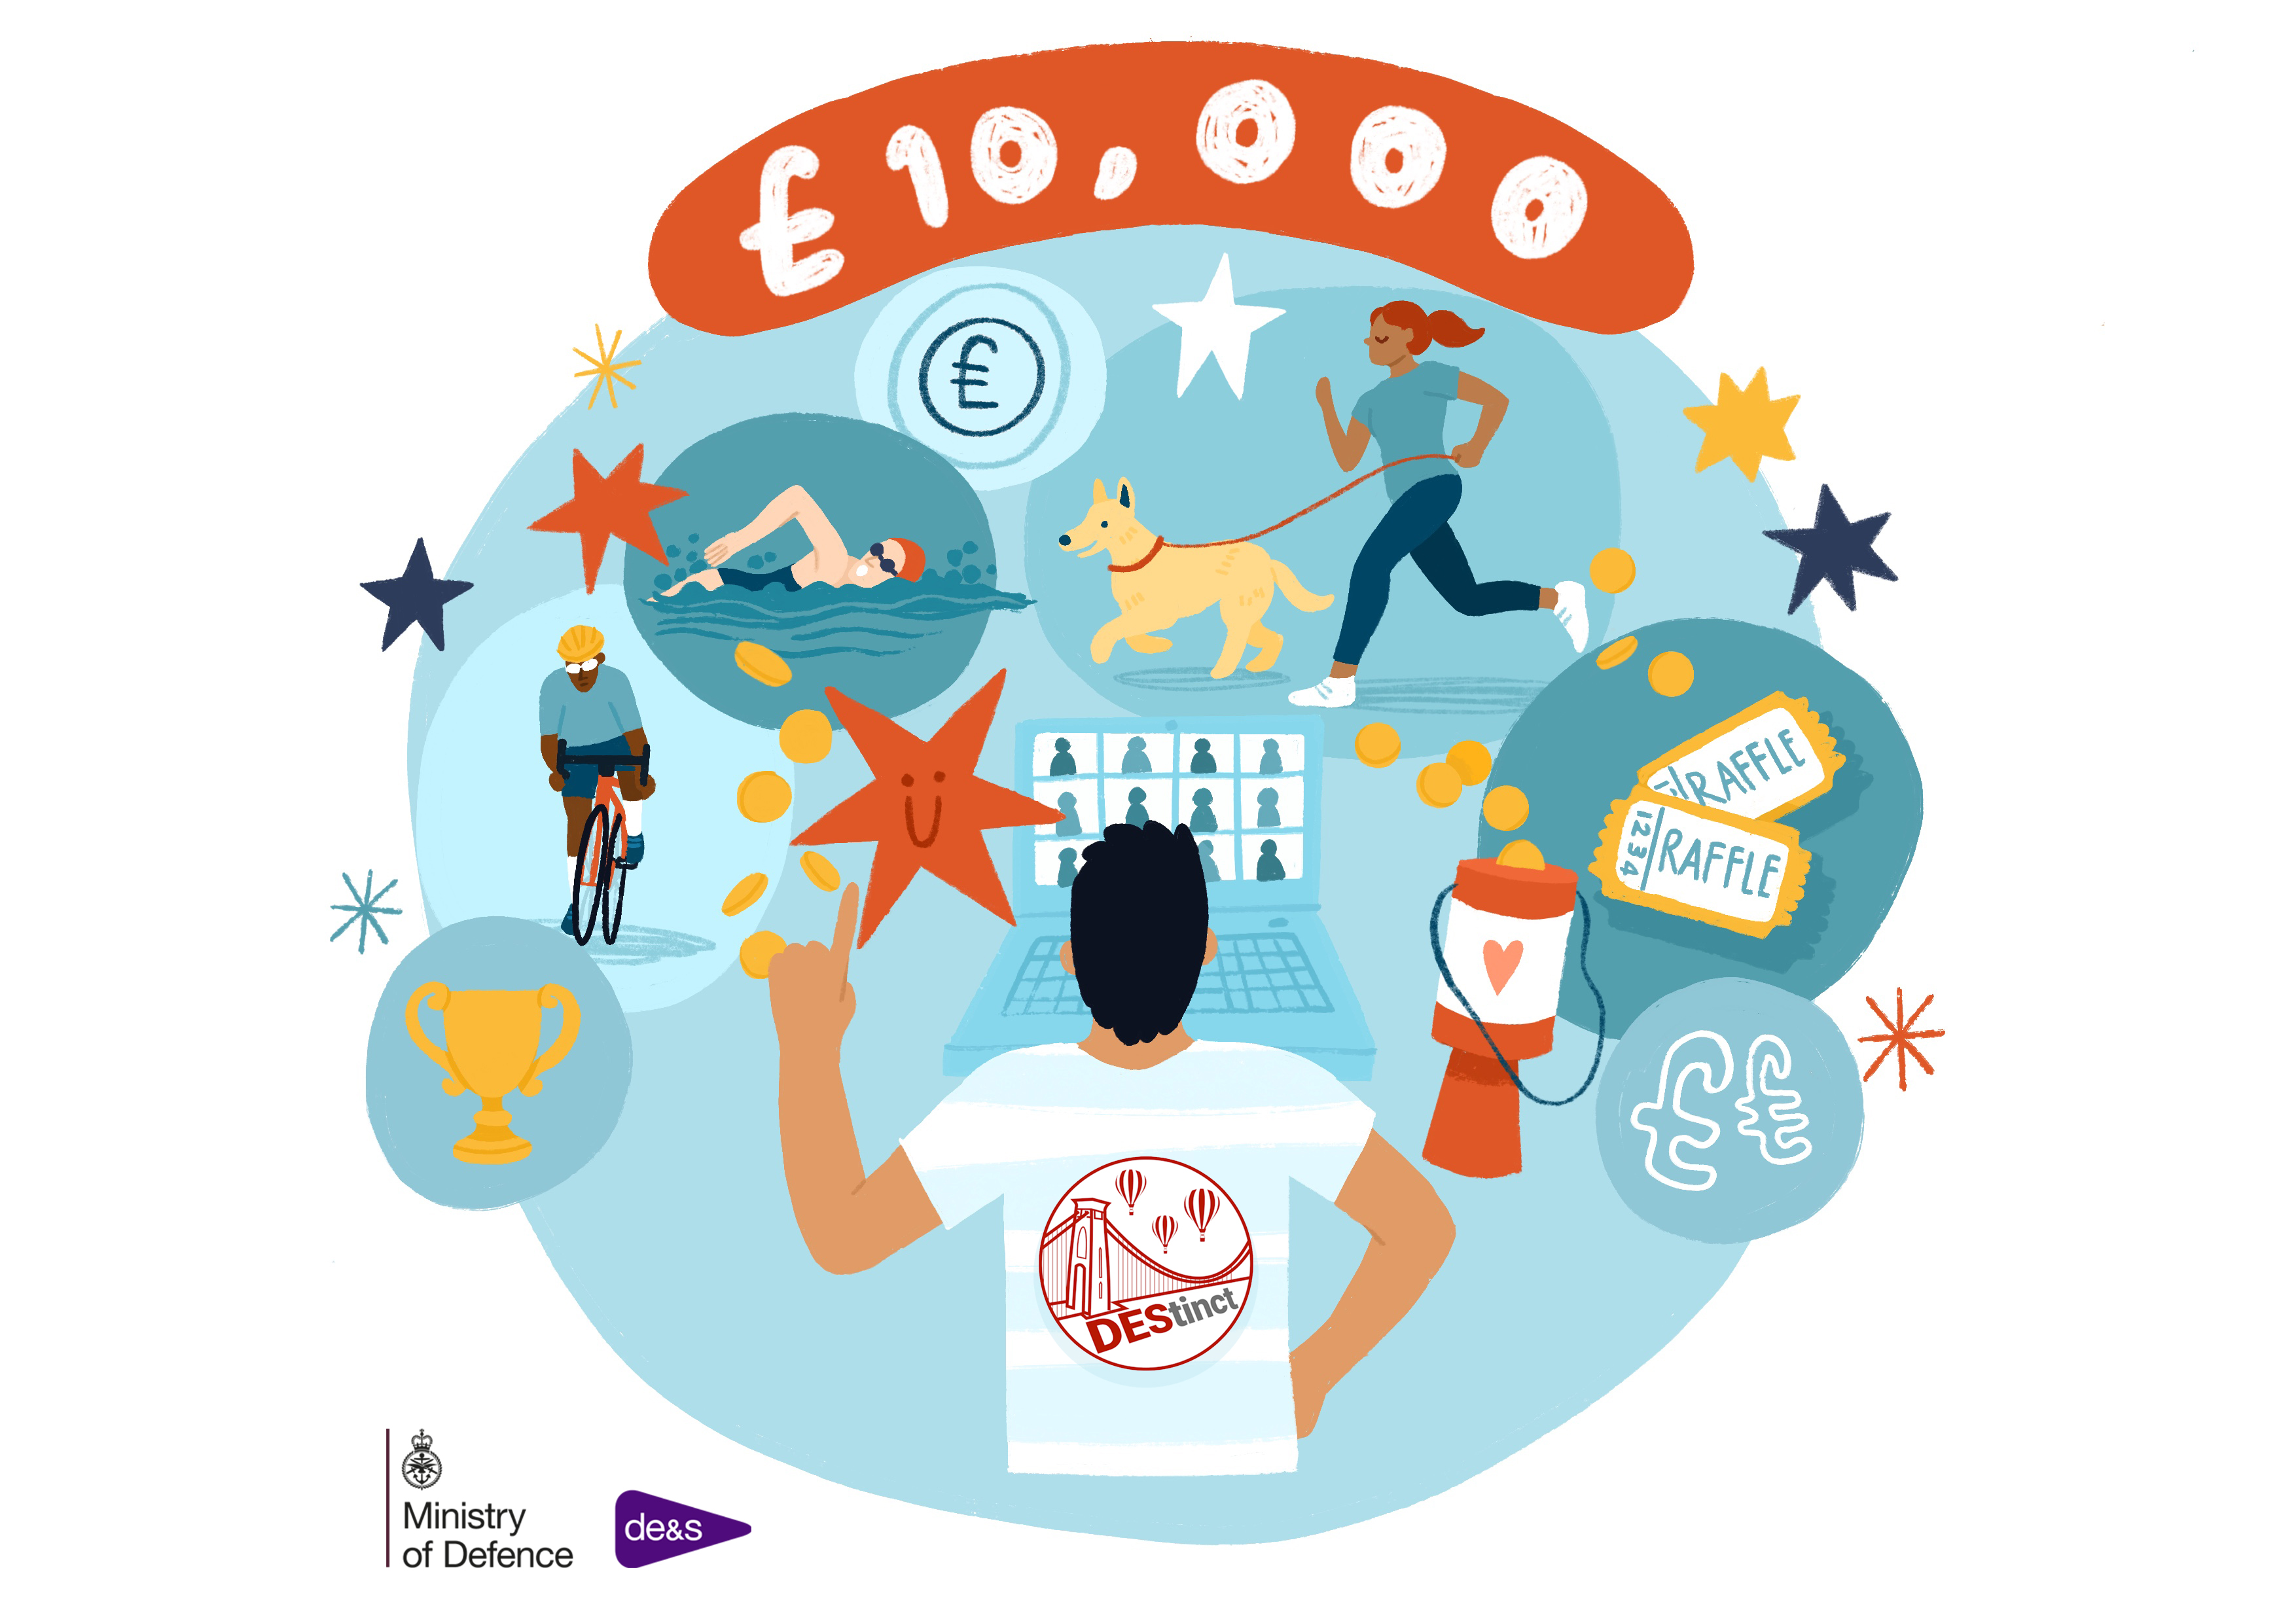 Team DEStinct Million Makers illustration showing showing different fundraising methods